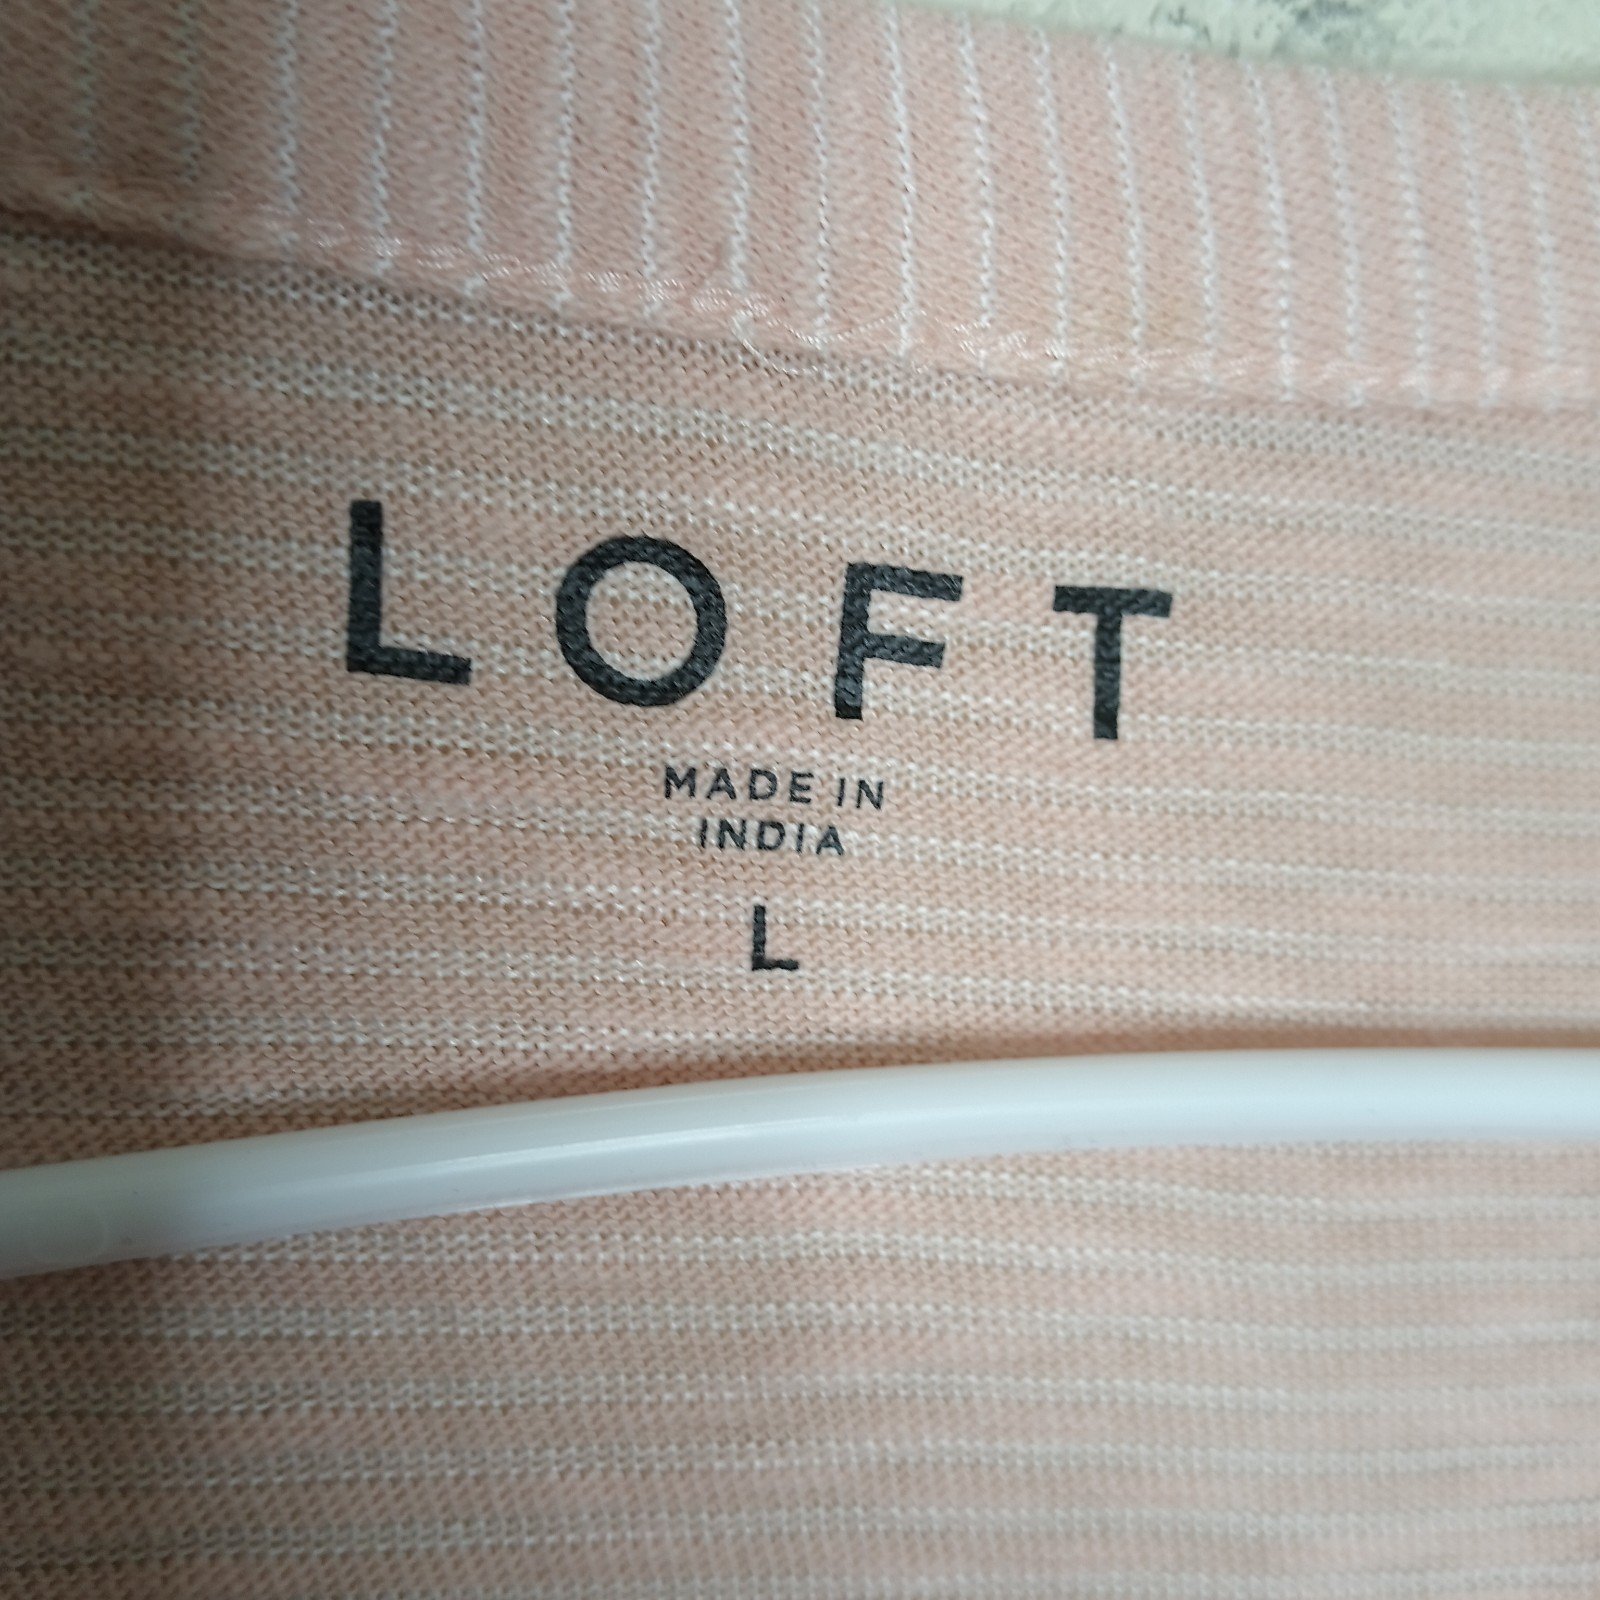 Factory Direct  Loft Women´s Lightweight Long Sleeve Shirt Sweater Size L NylC9Ug8O Fashion